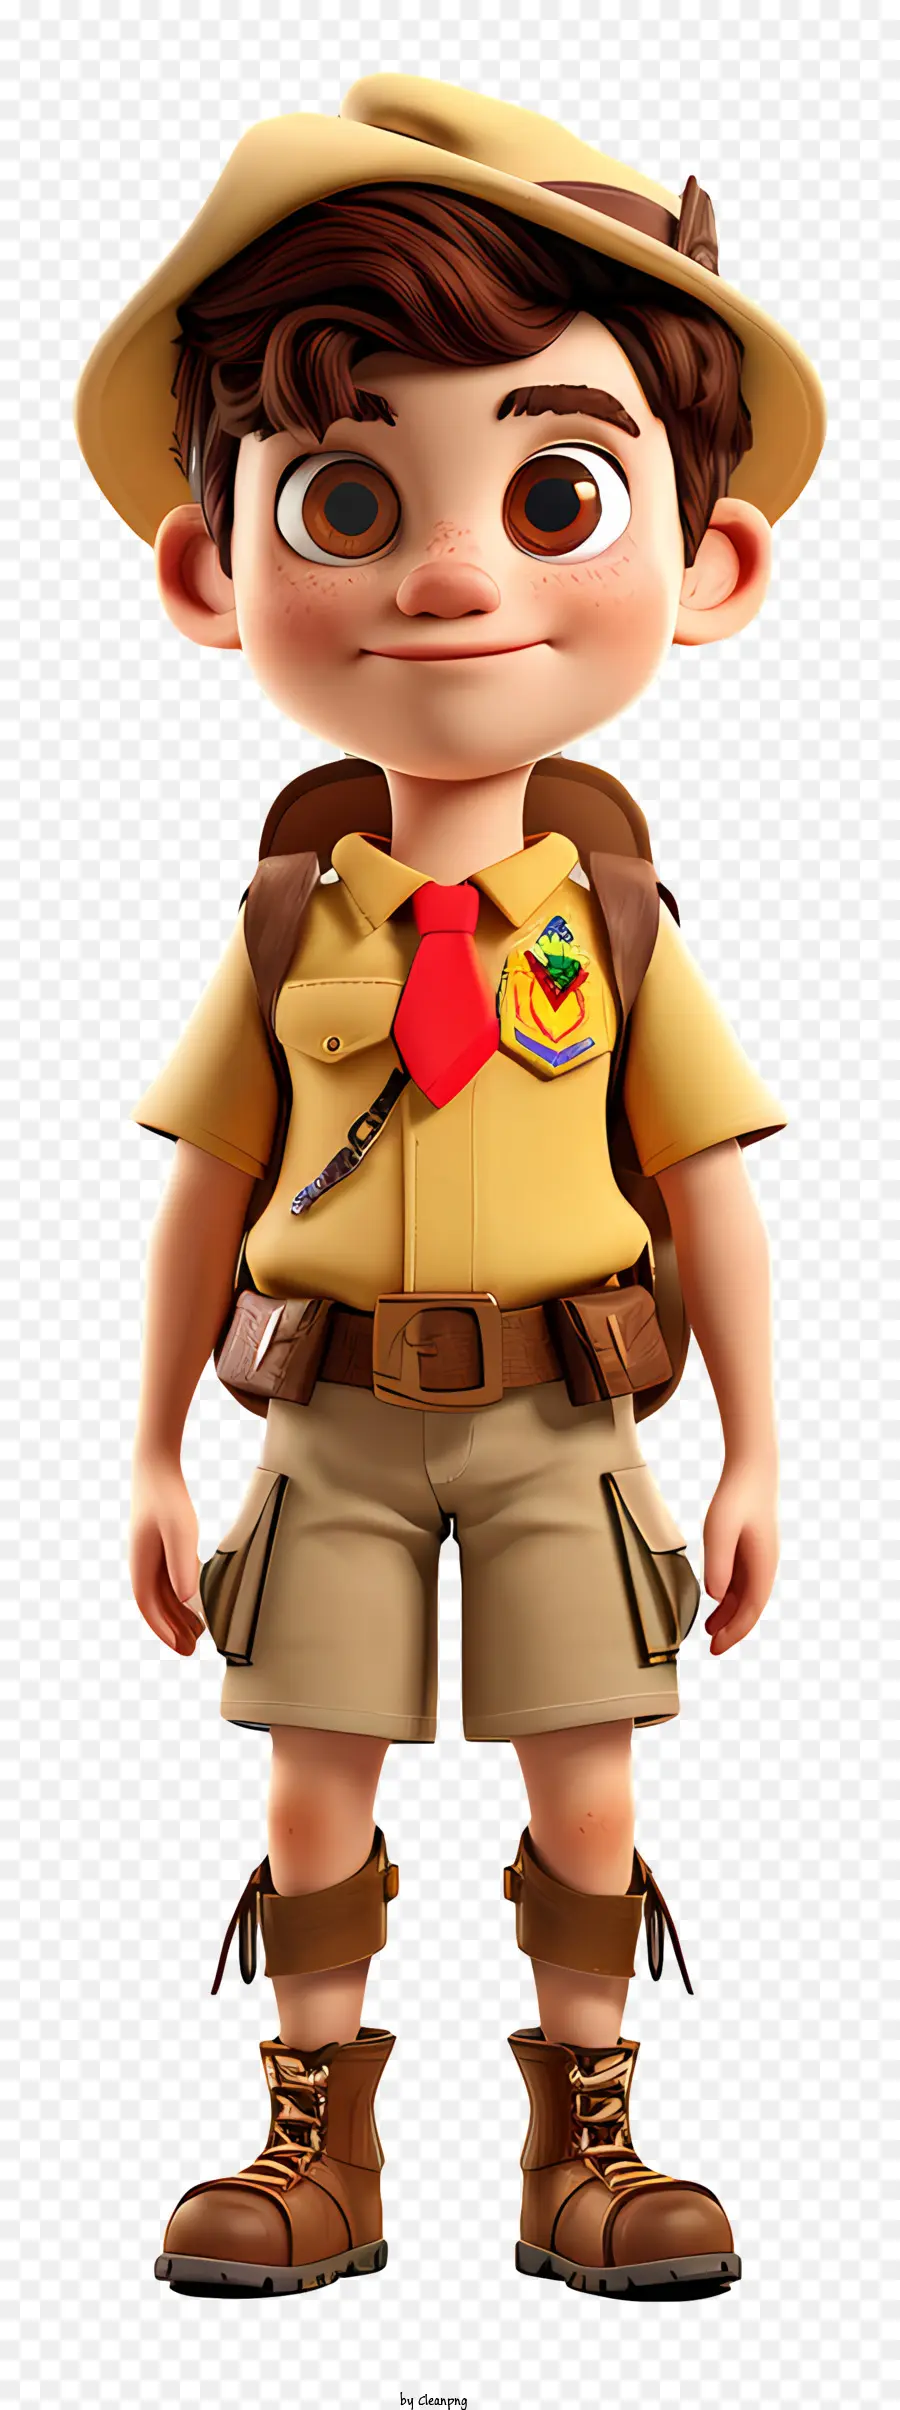 boys scout boy yellow shirt shorts brown boots